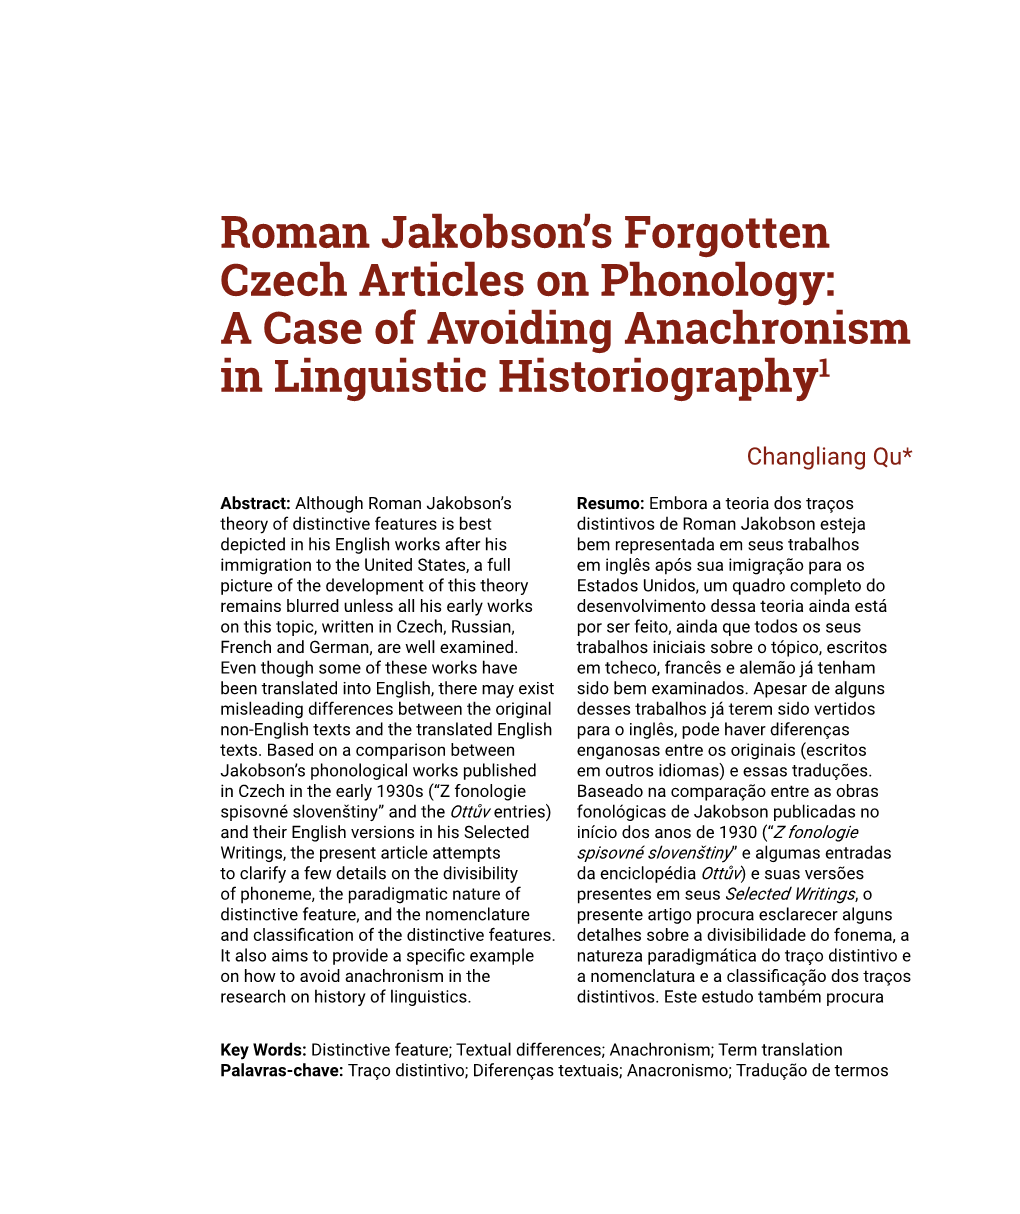 Roman Jakobson's Forgotten Czech Articles on Phonology